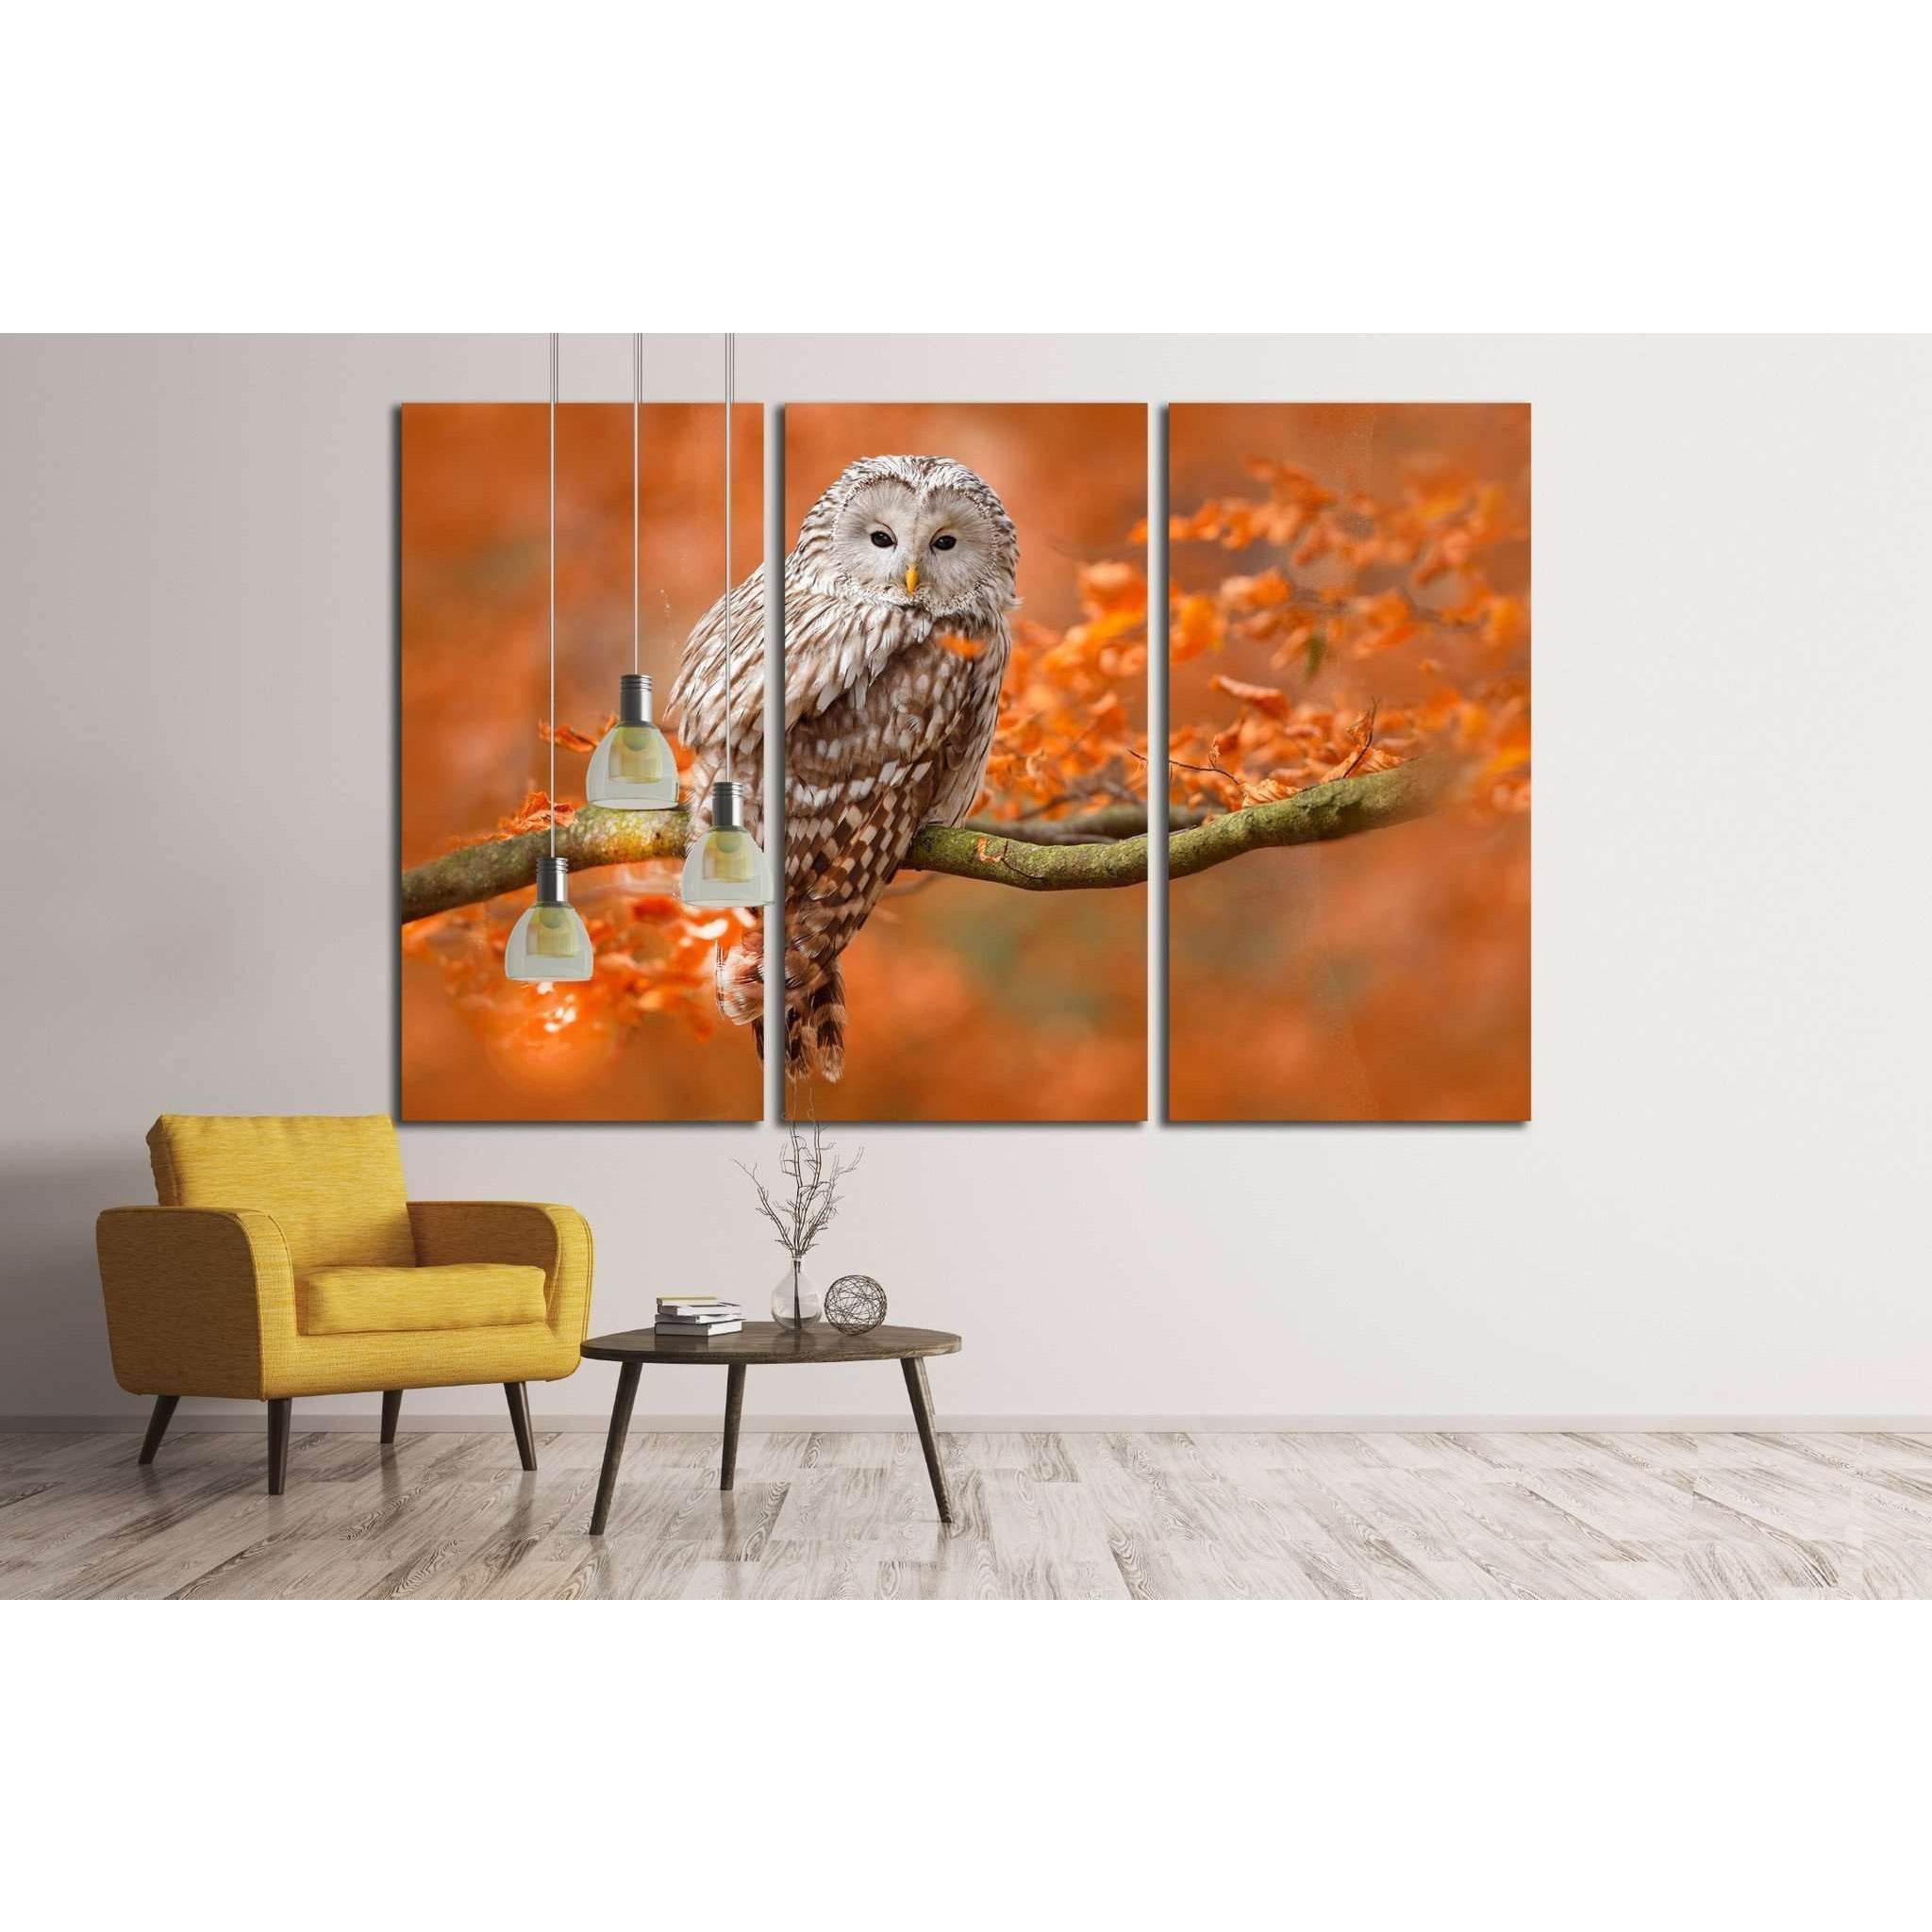 Ural Owl, Strix uralensis, sitting on tree branch, Sweden №1857 Ready to Hang Canvas Print